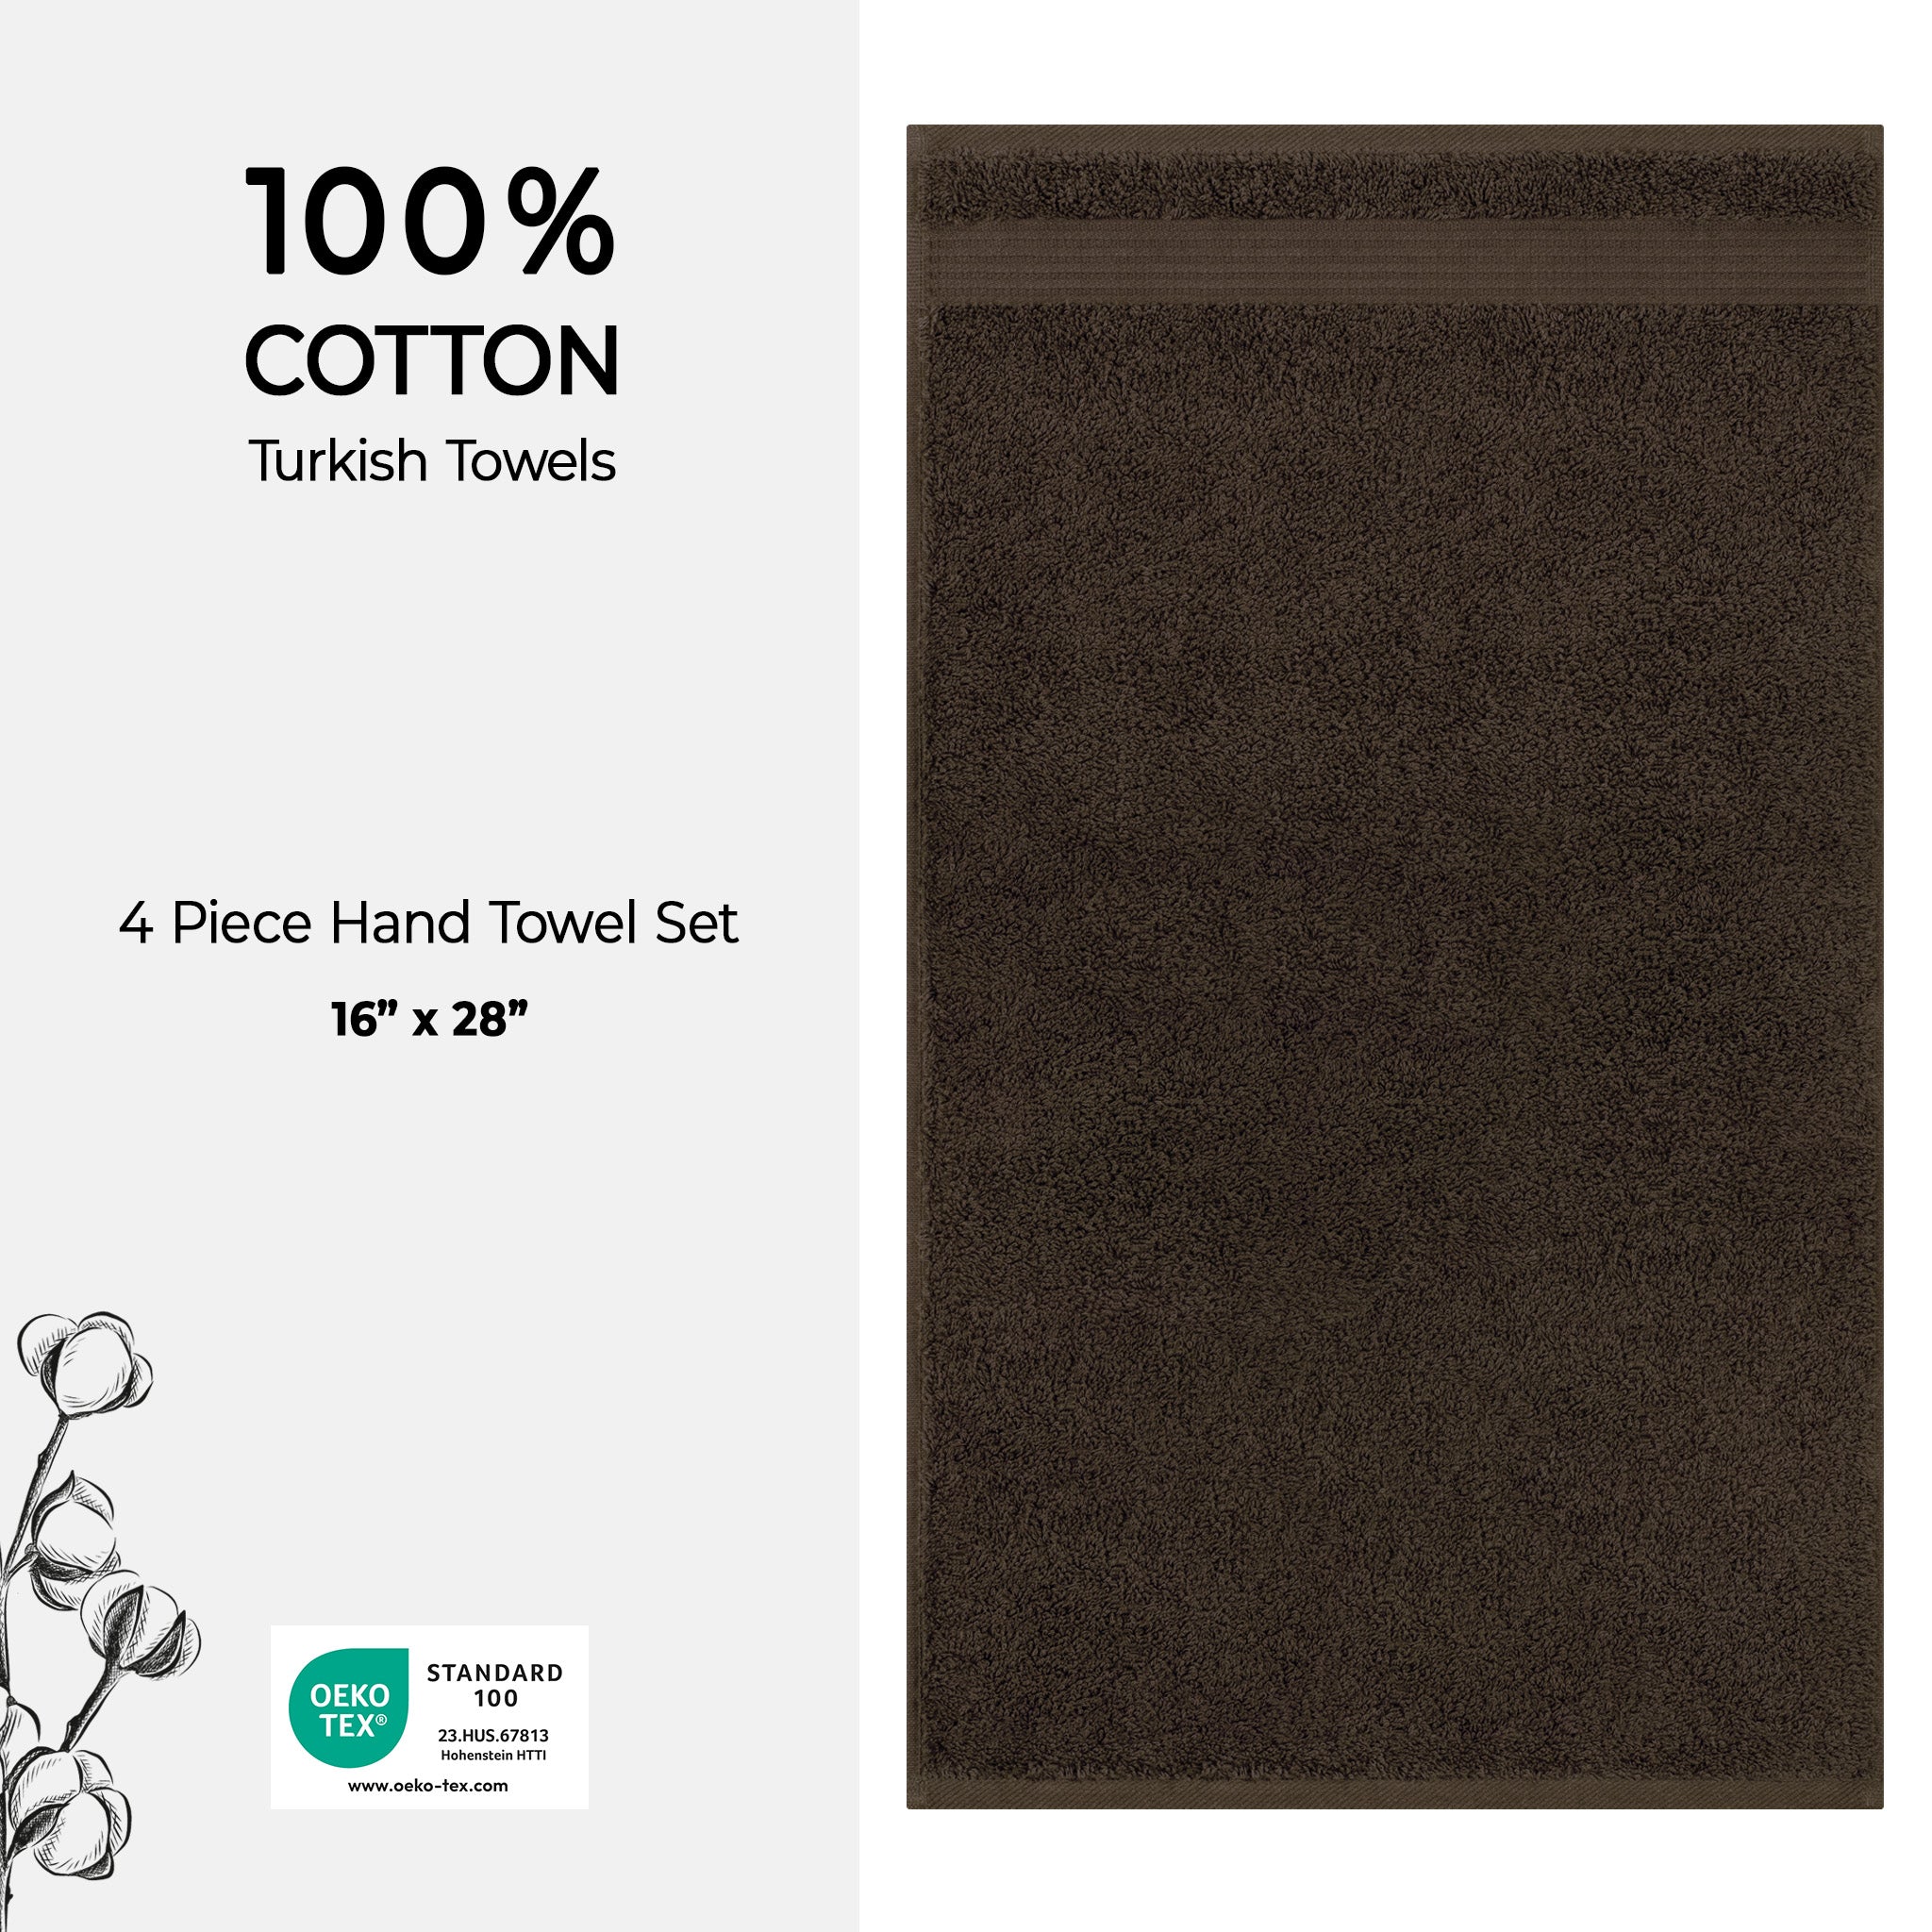 American Soft Linen Bekos 100% Cotton Turkish Towels, 4 Piece Hand Towel Set -brown-04